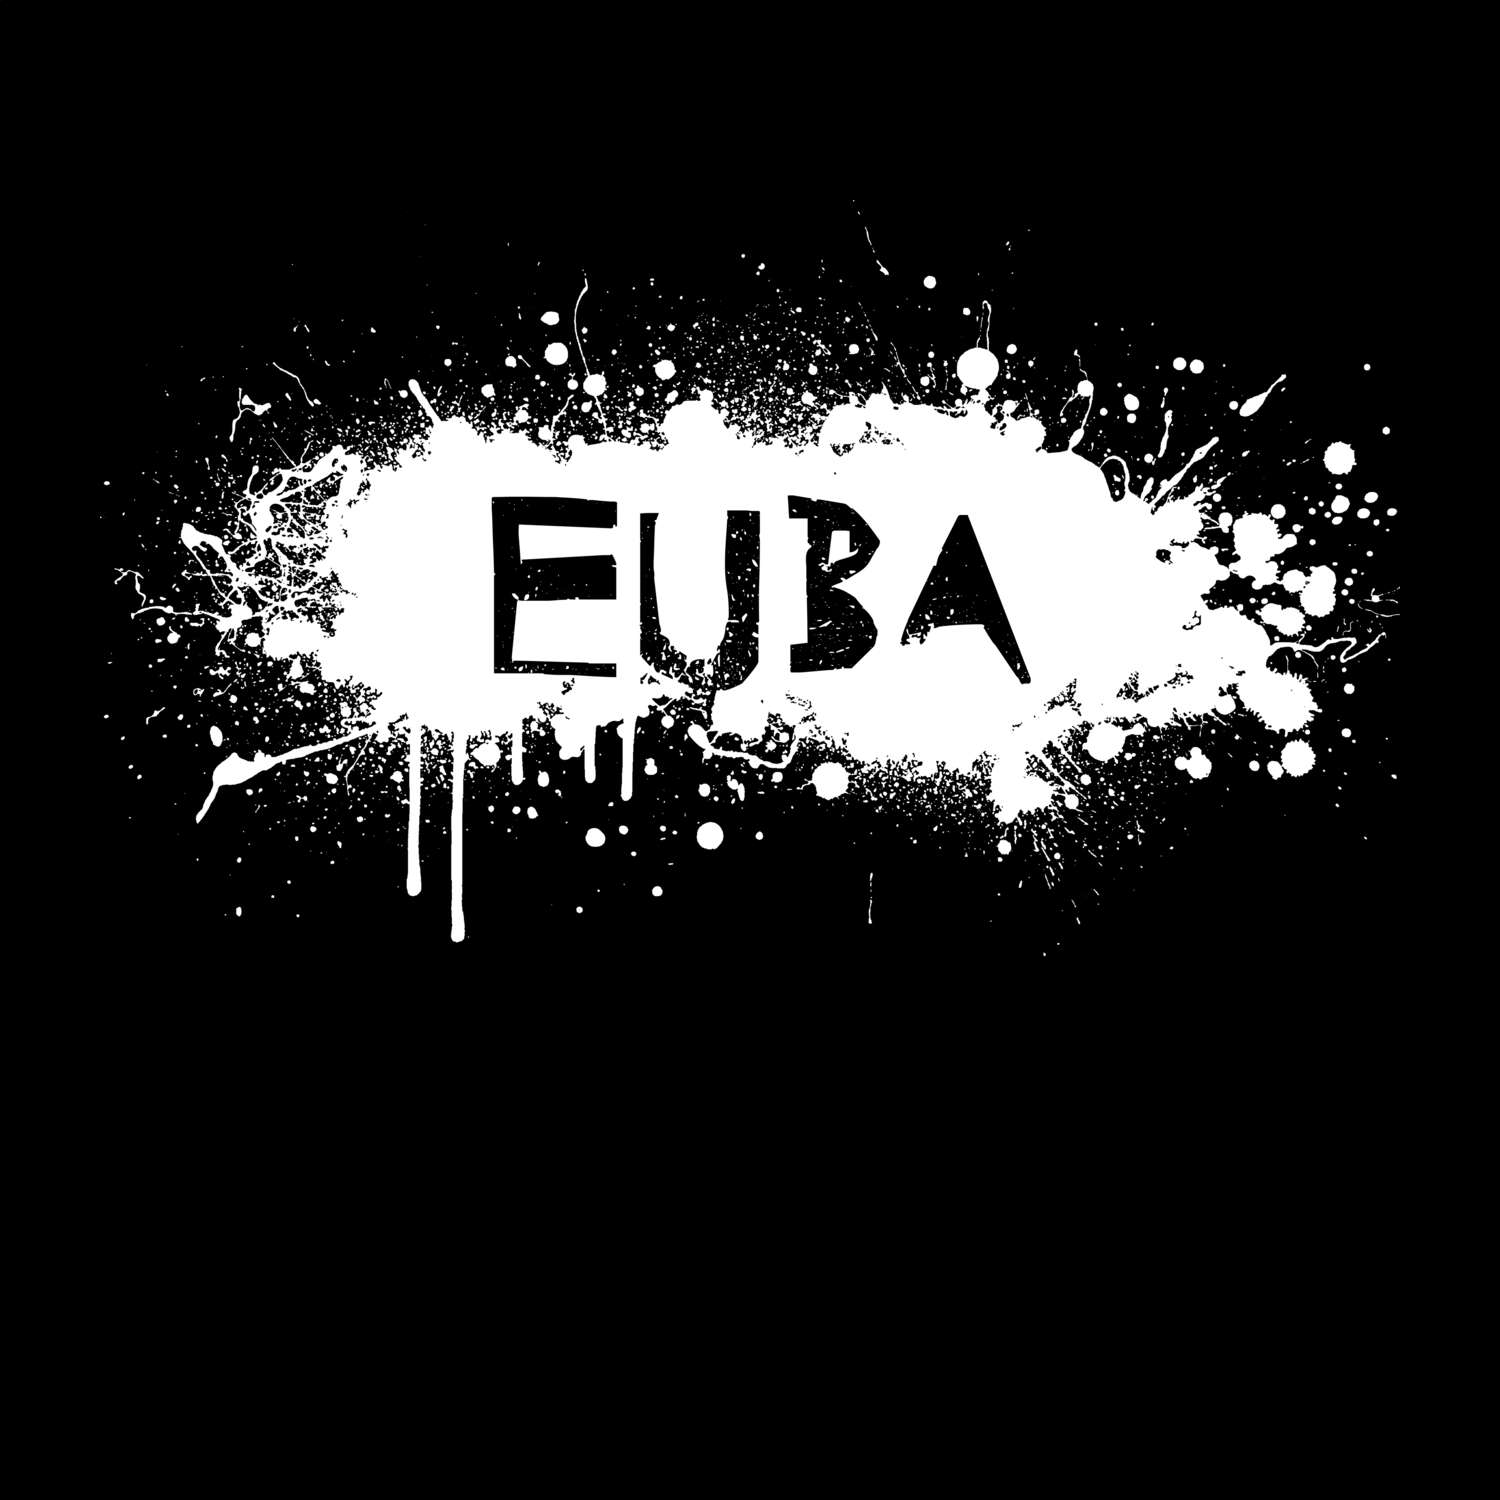 Euba T-Shirt »Paint Splash Punk«